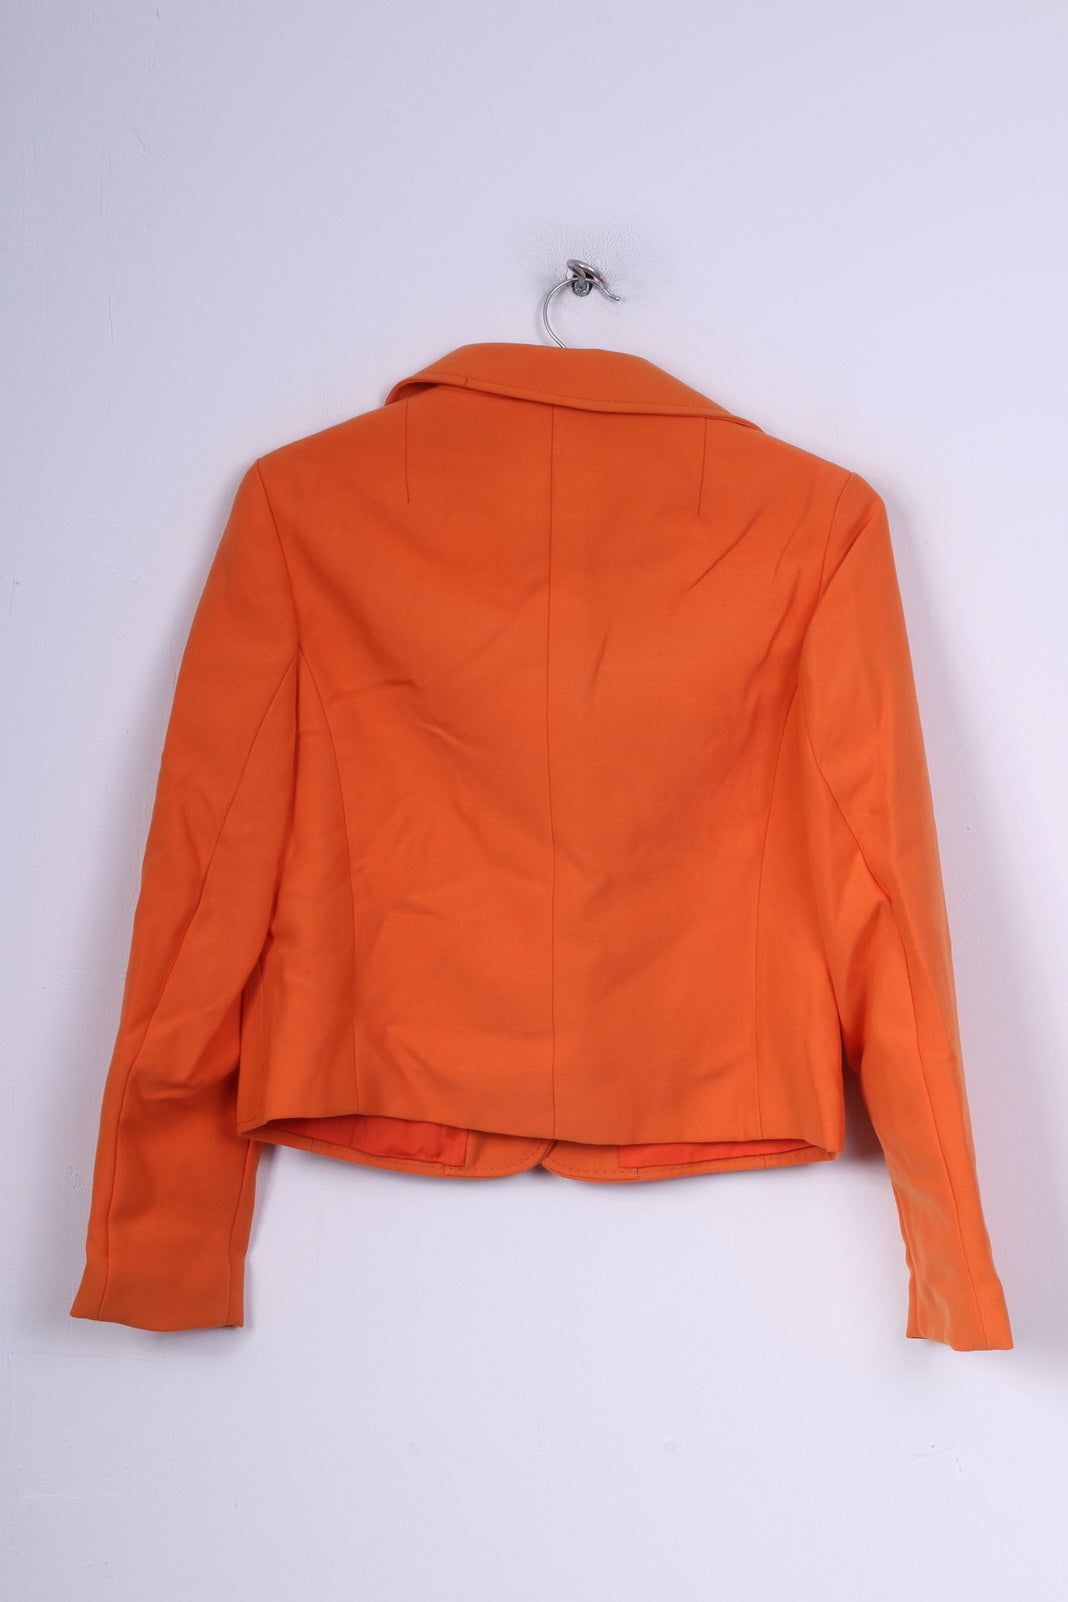 Trevira Womens 40 M Blazer Single Breasted Orange Jacket Vintage